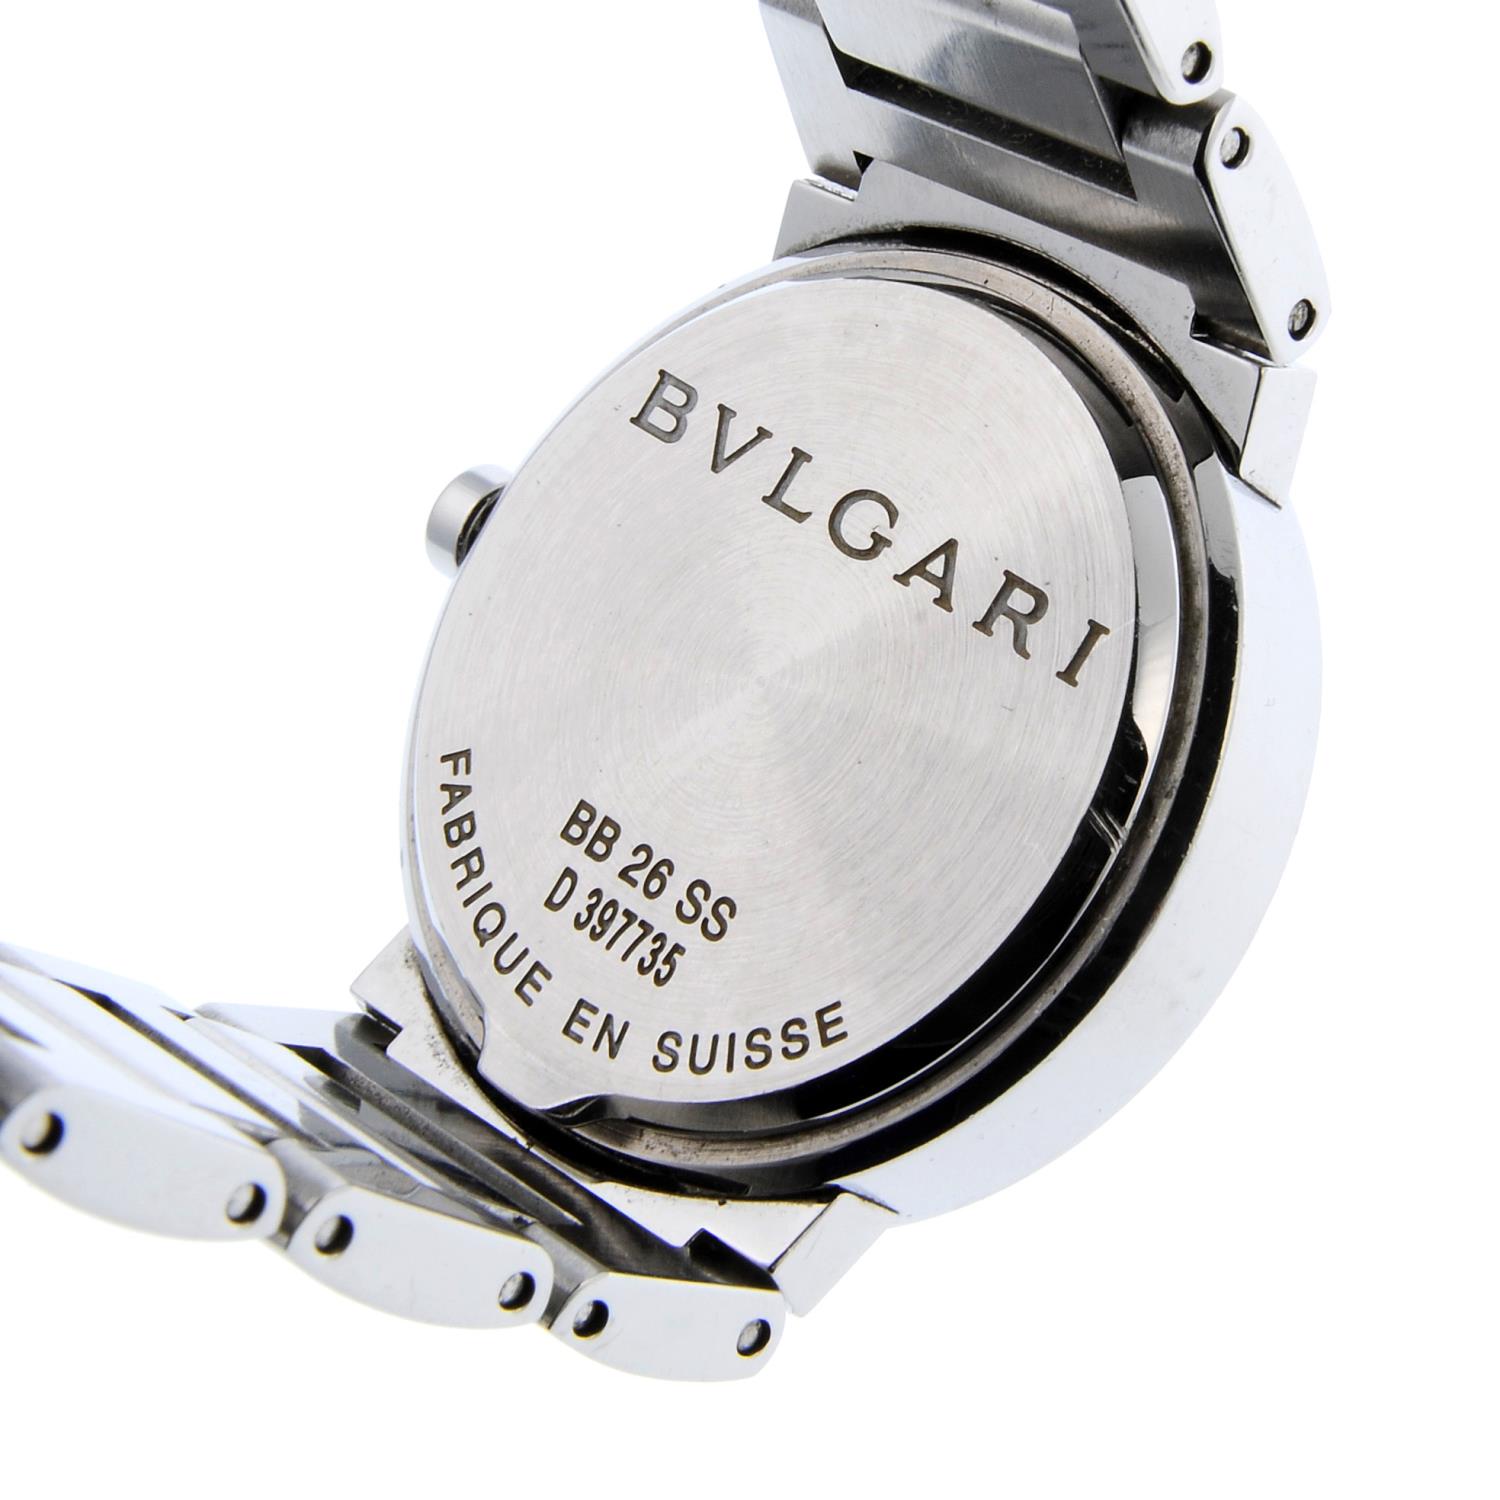 BULGARI - a lady's Bulgari bracelet watch. - Image 4 of 4